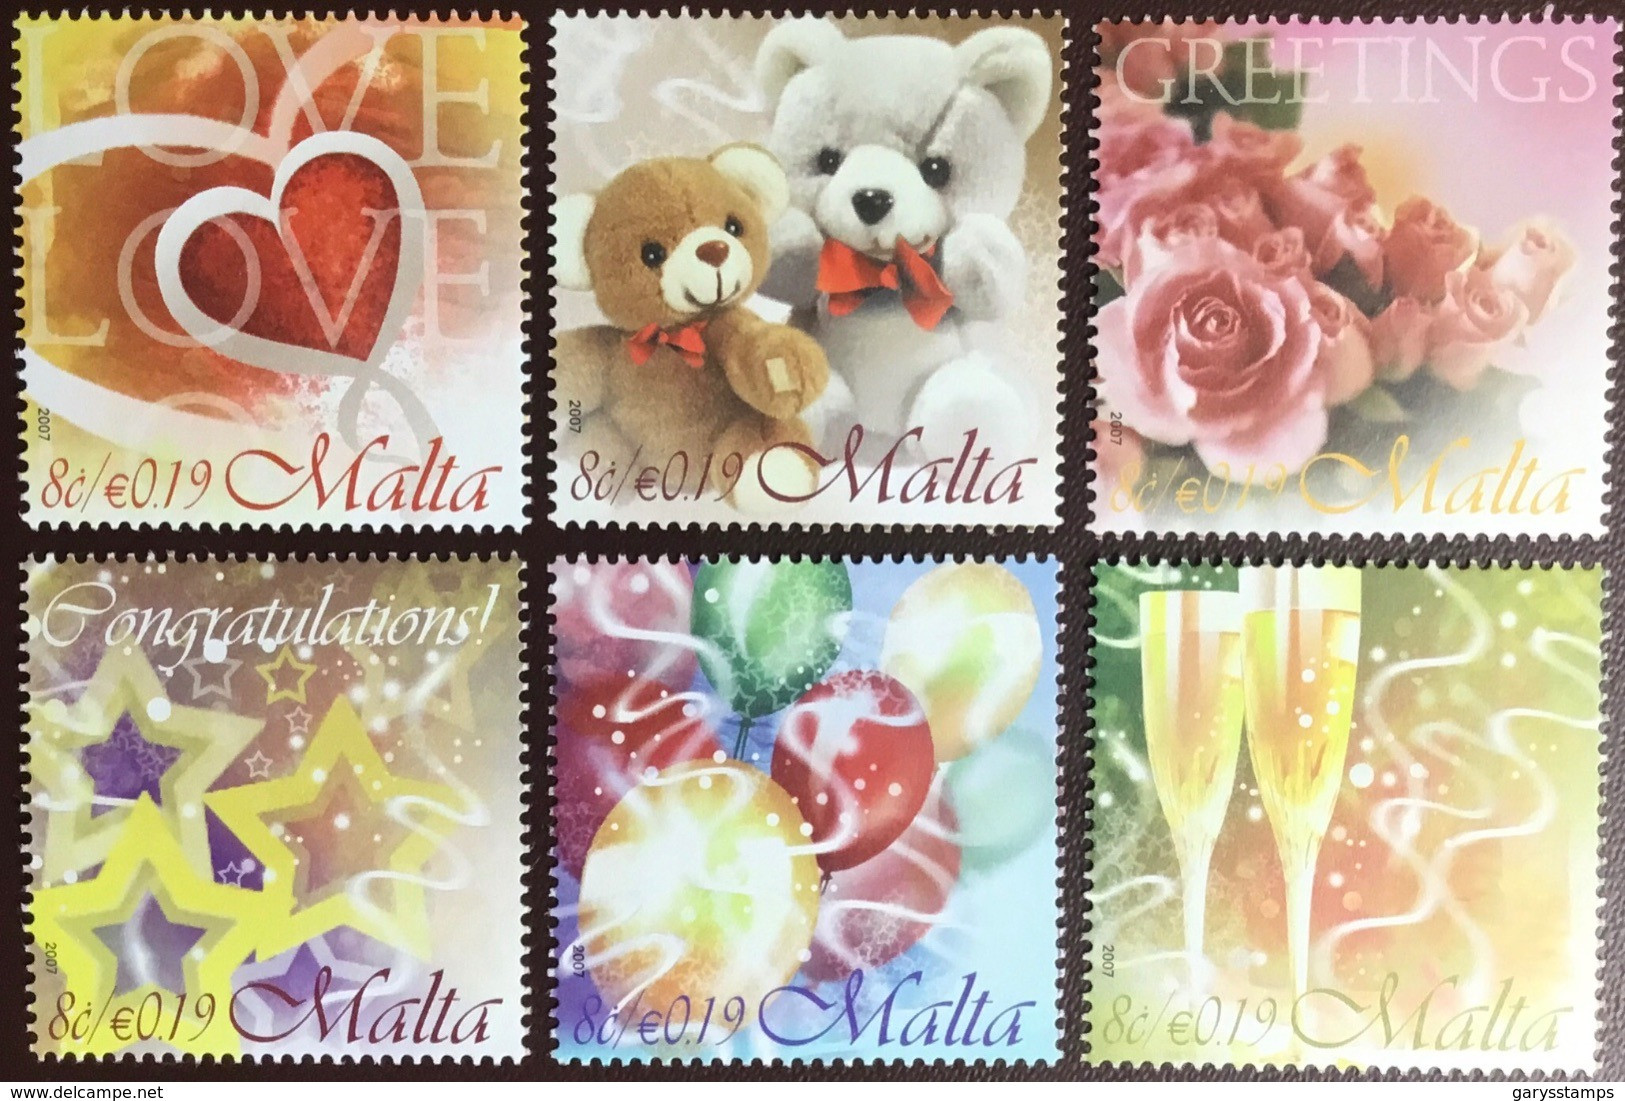 Malta 2007 Greetings Stamps MNH - Malte